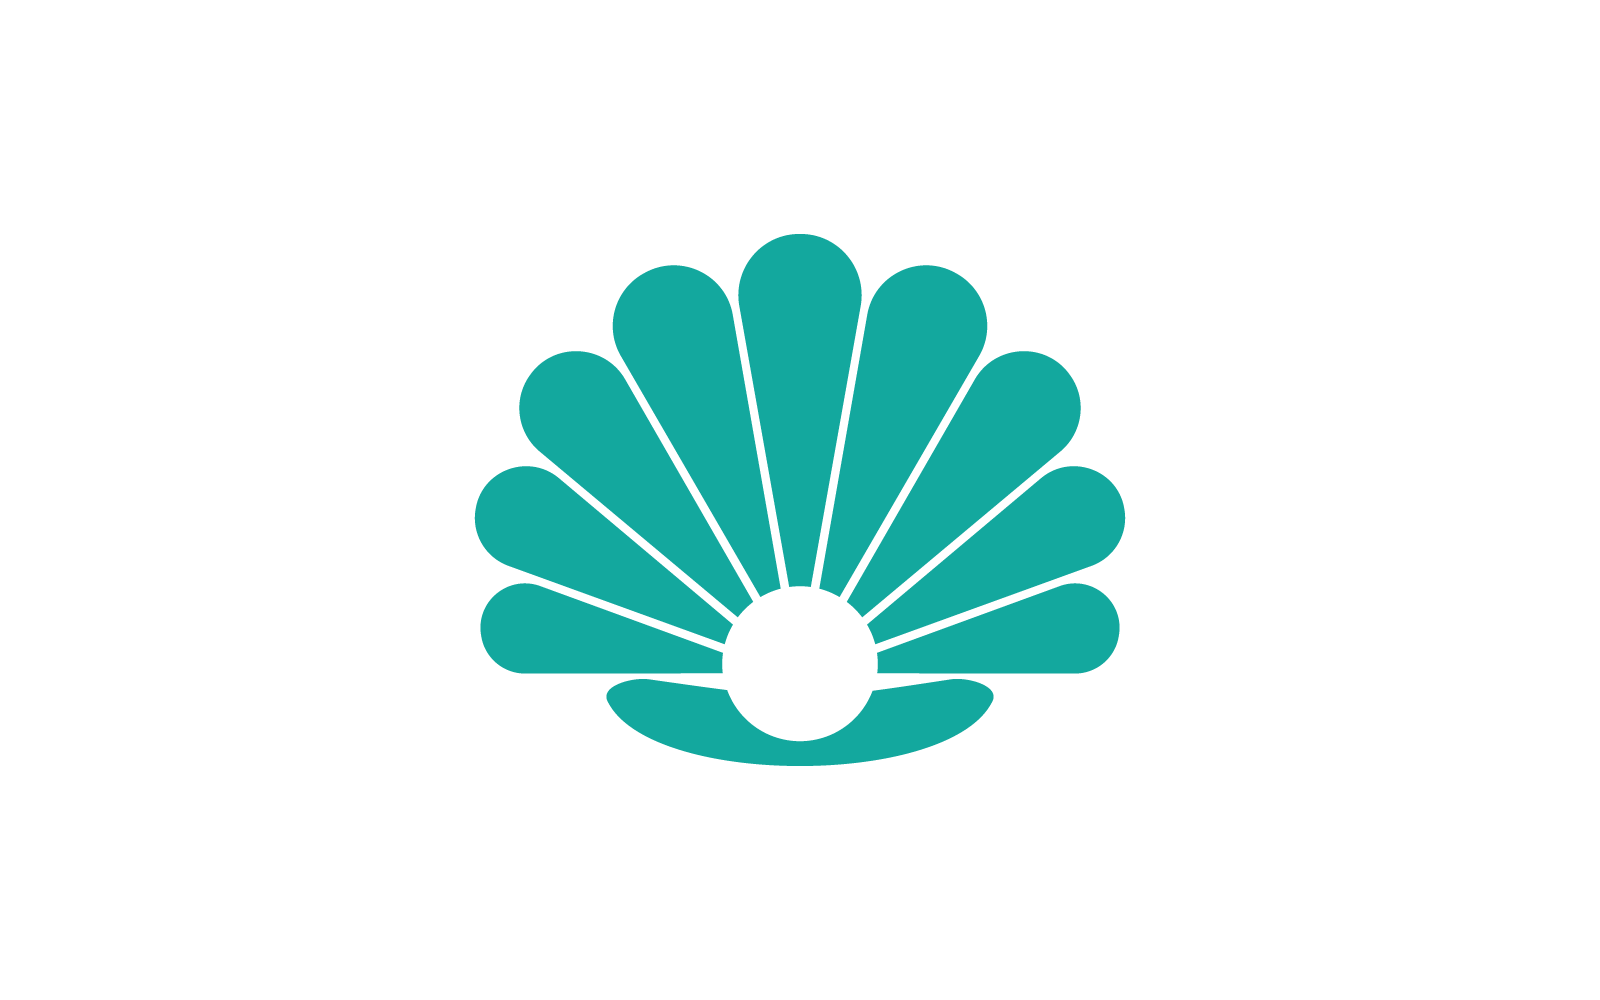 Shell logo illustration flat design template